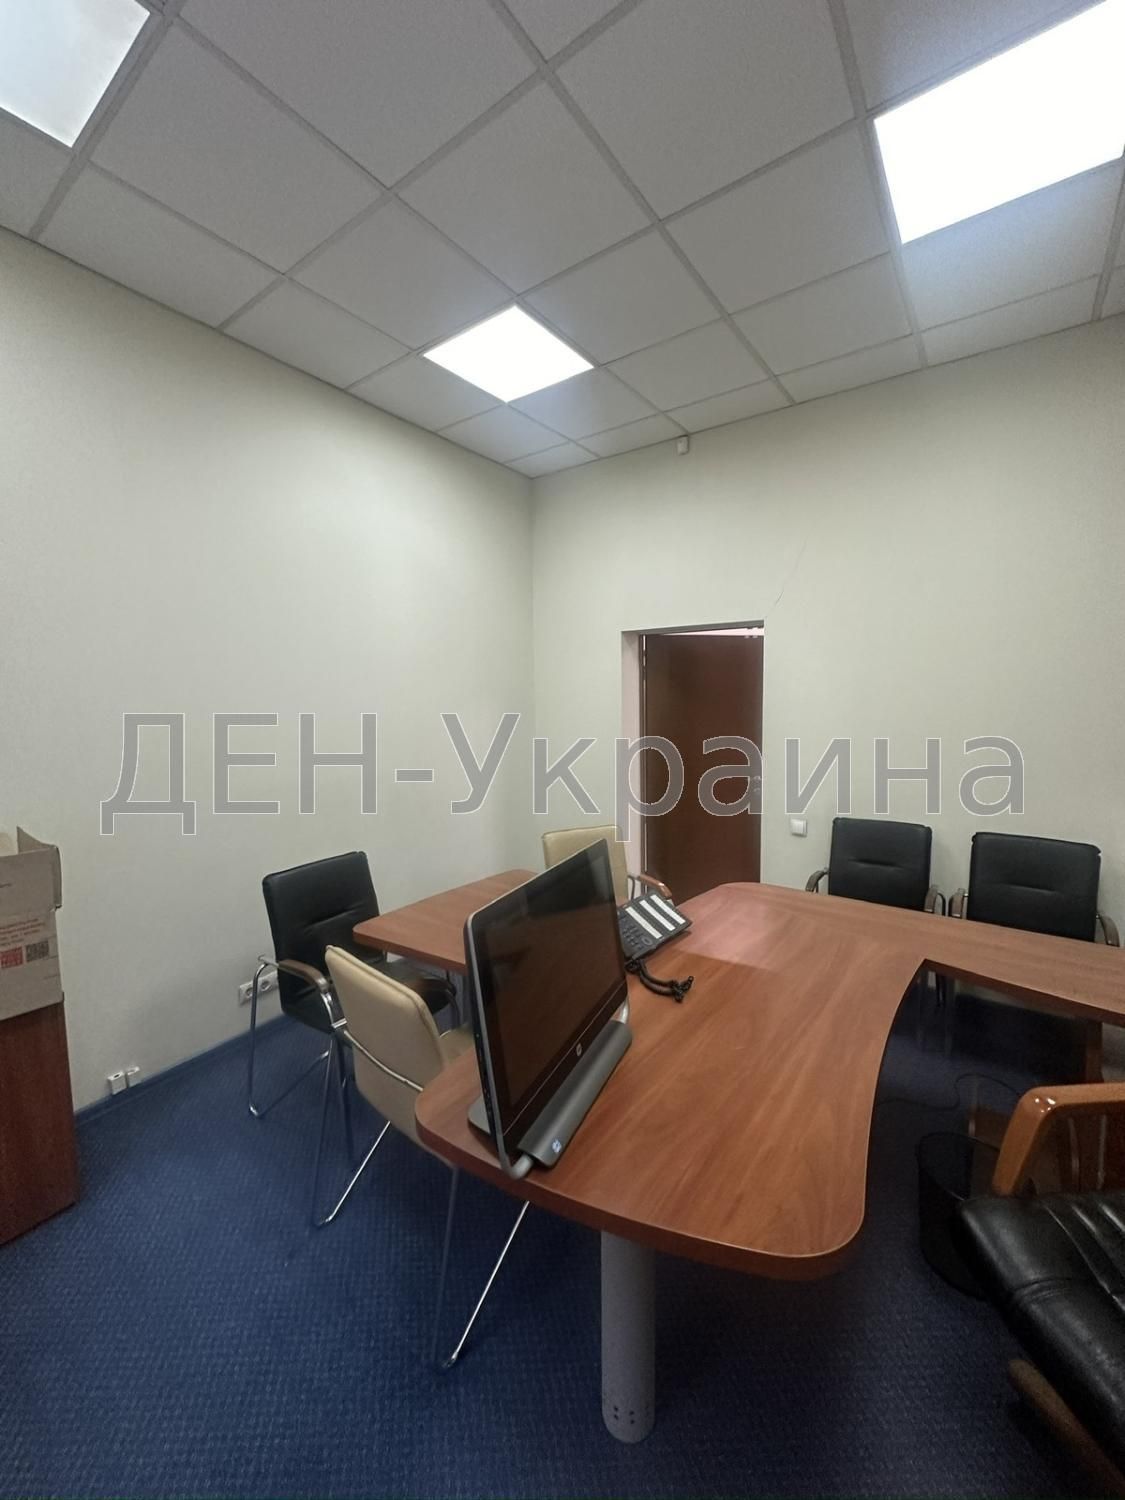 Аренда офиса в центре Киева, ул.Ярославов Вал, 212 м2- 127000 грн.